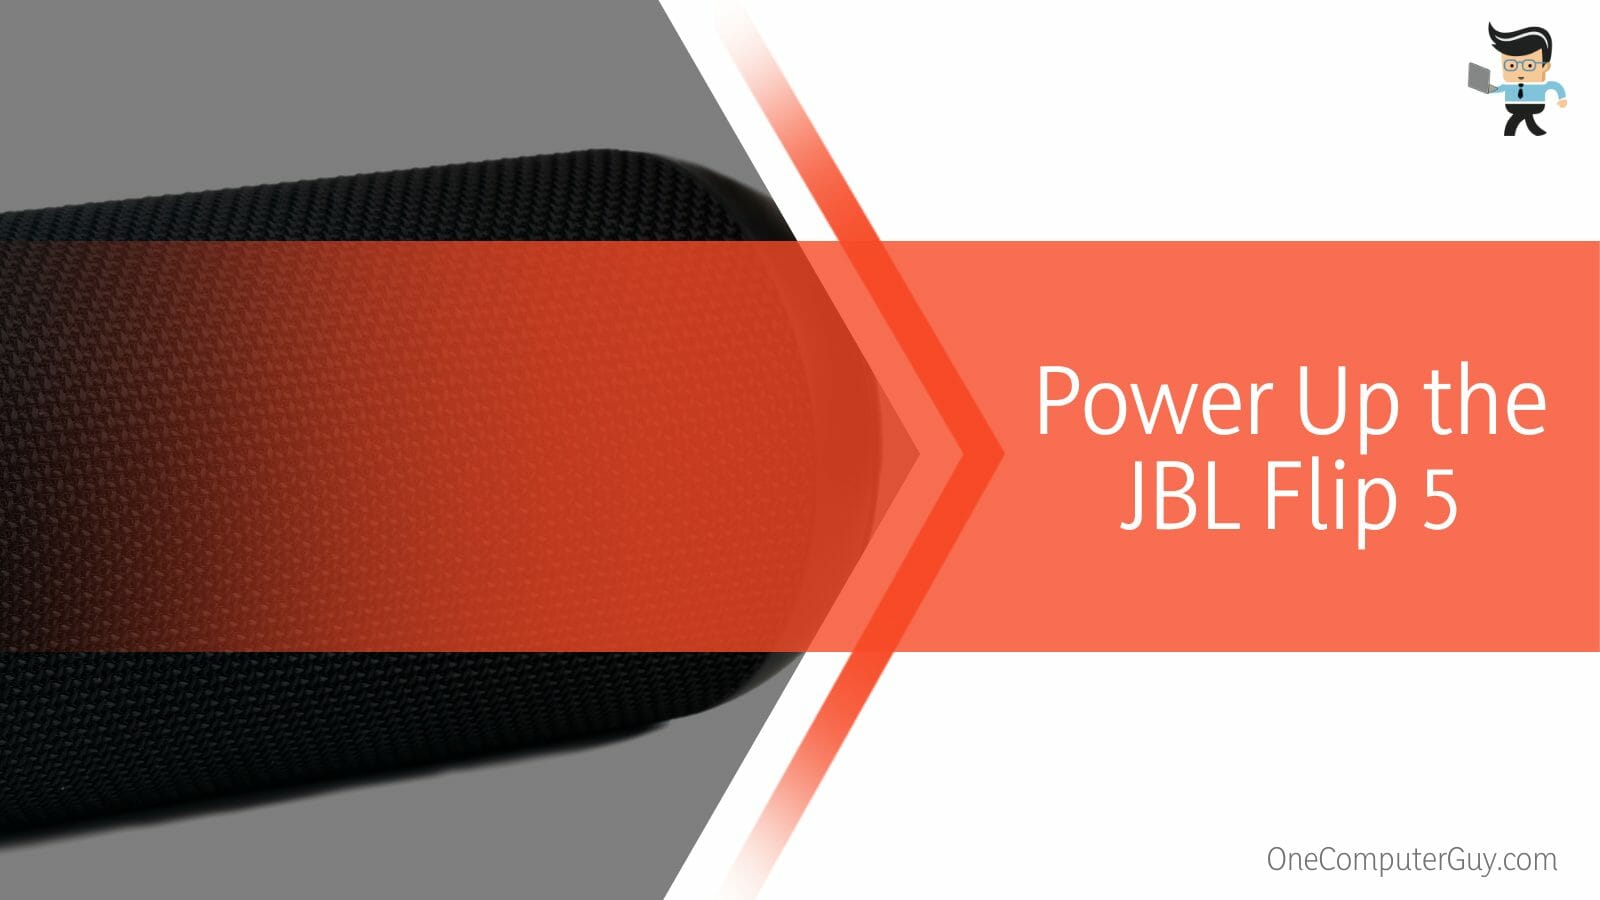 Power Up the JBL Flip 5